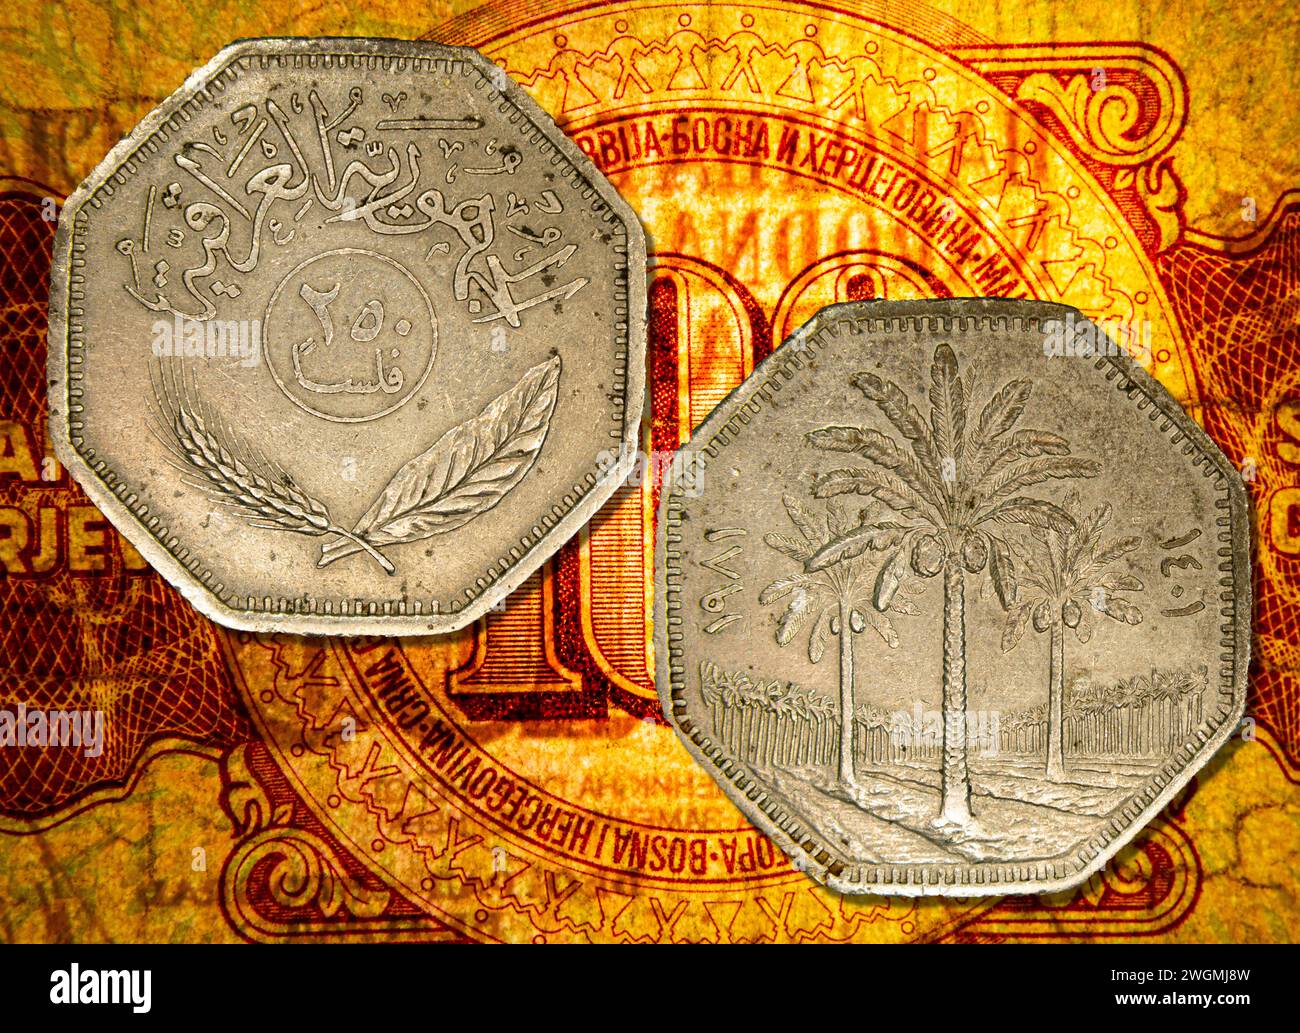 Two vintage Libyan Jamahiriya dinar coins placed on a vibrant yellow tablecloth Stock Photo